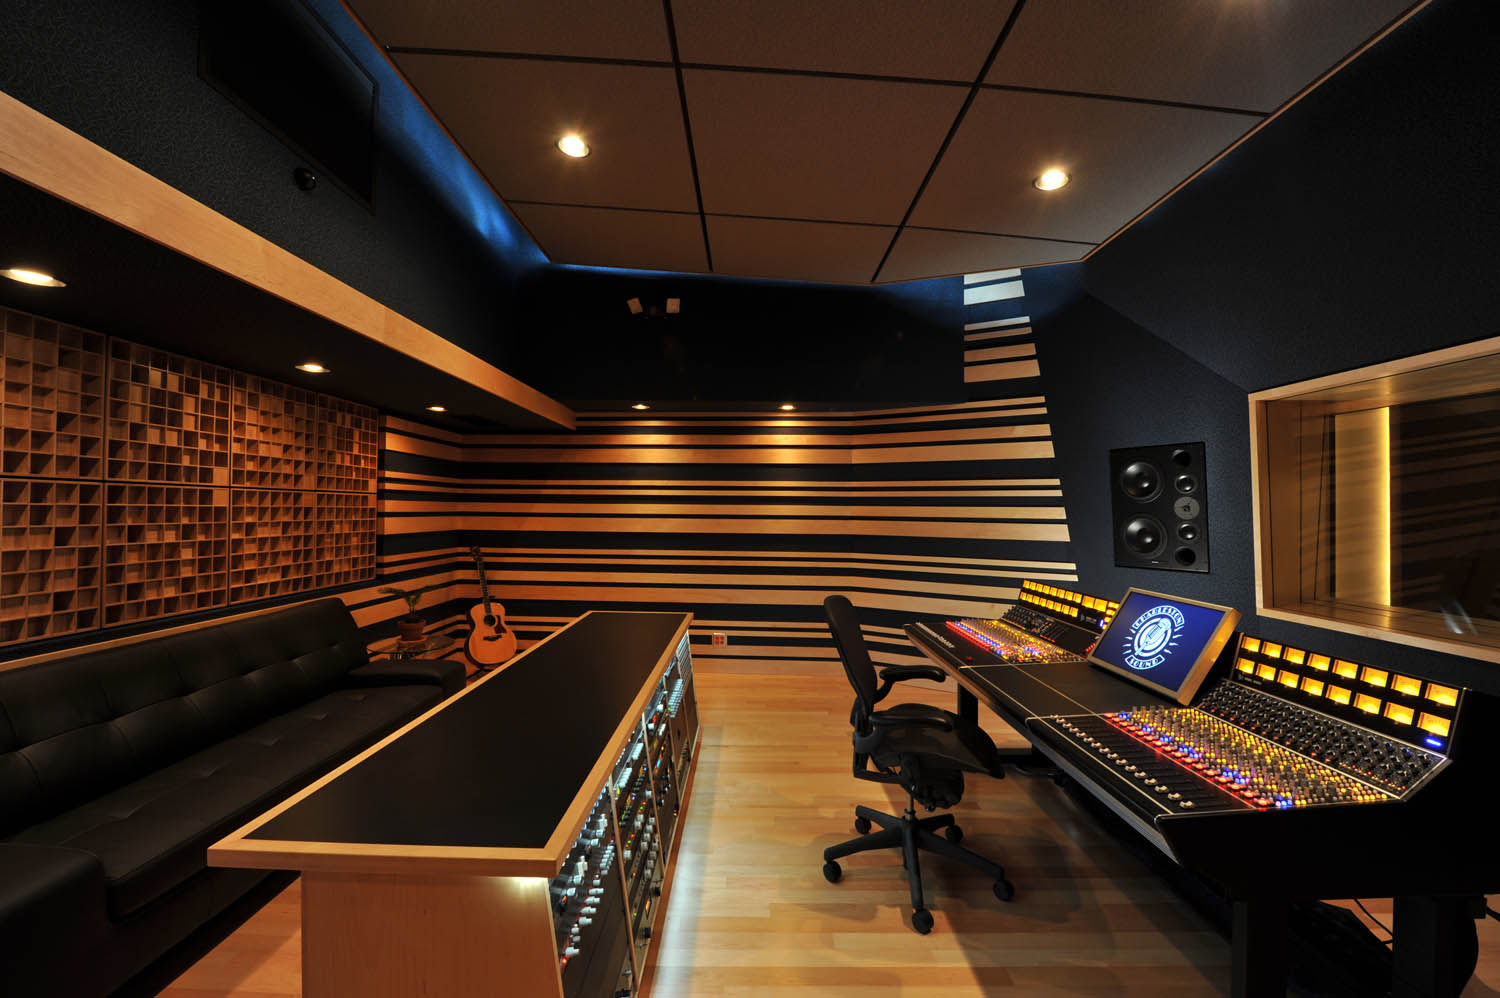 DIY Music Studio Desk Plans Wooden PDF woodworking plans 